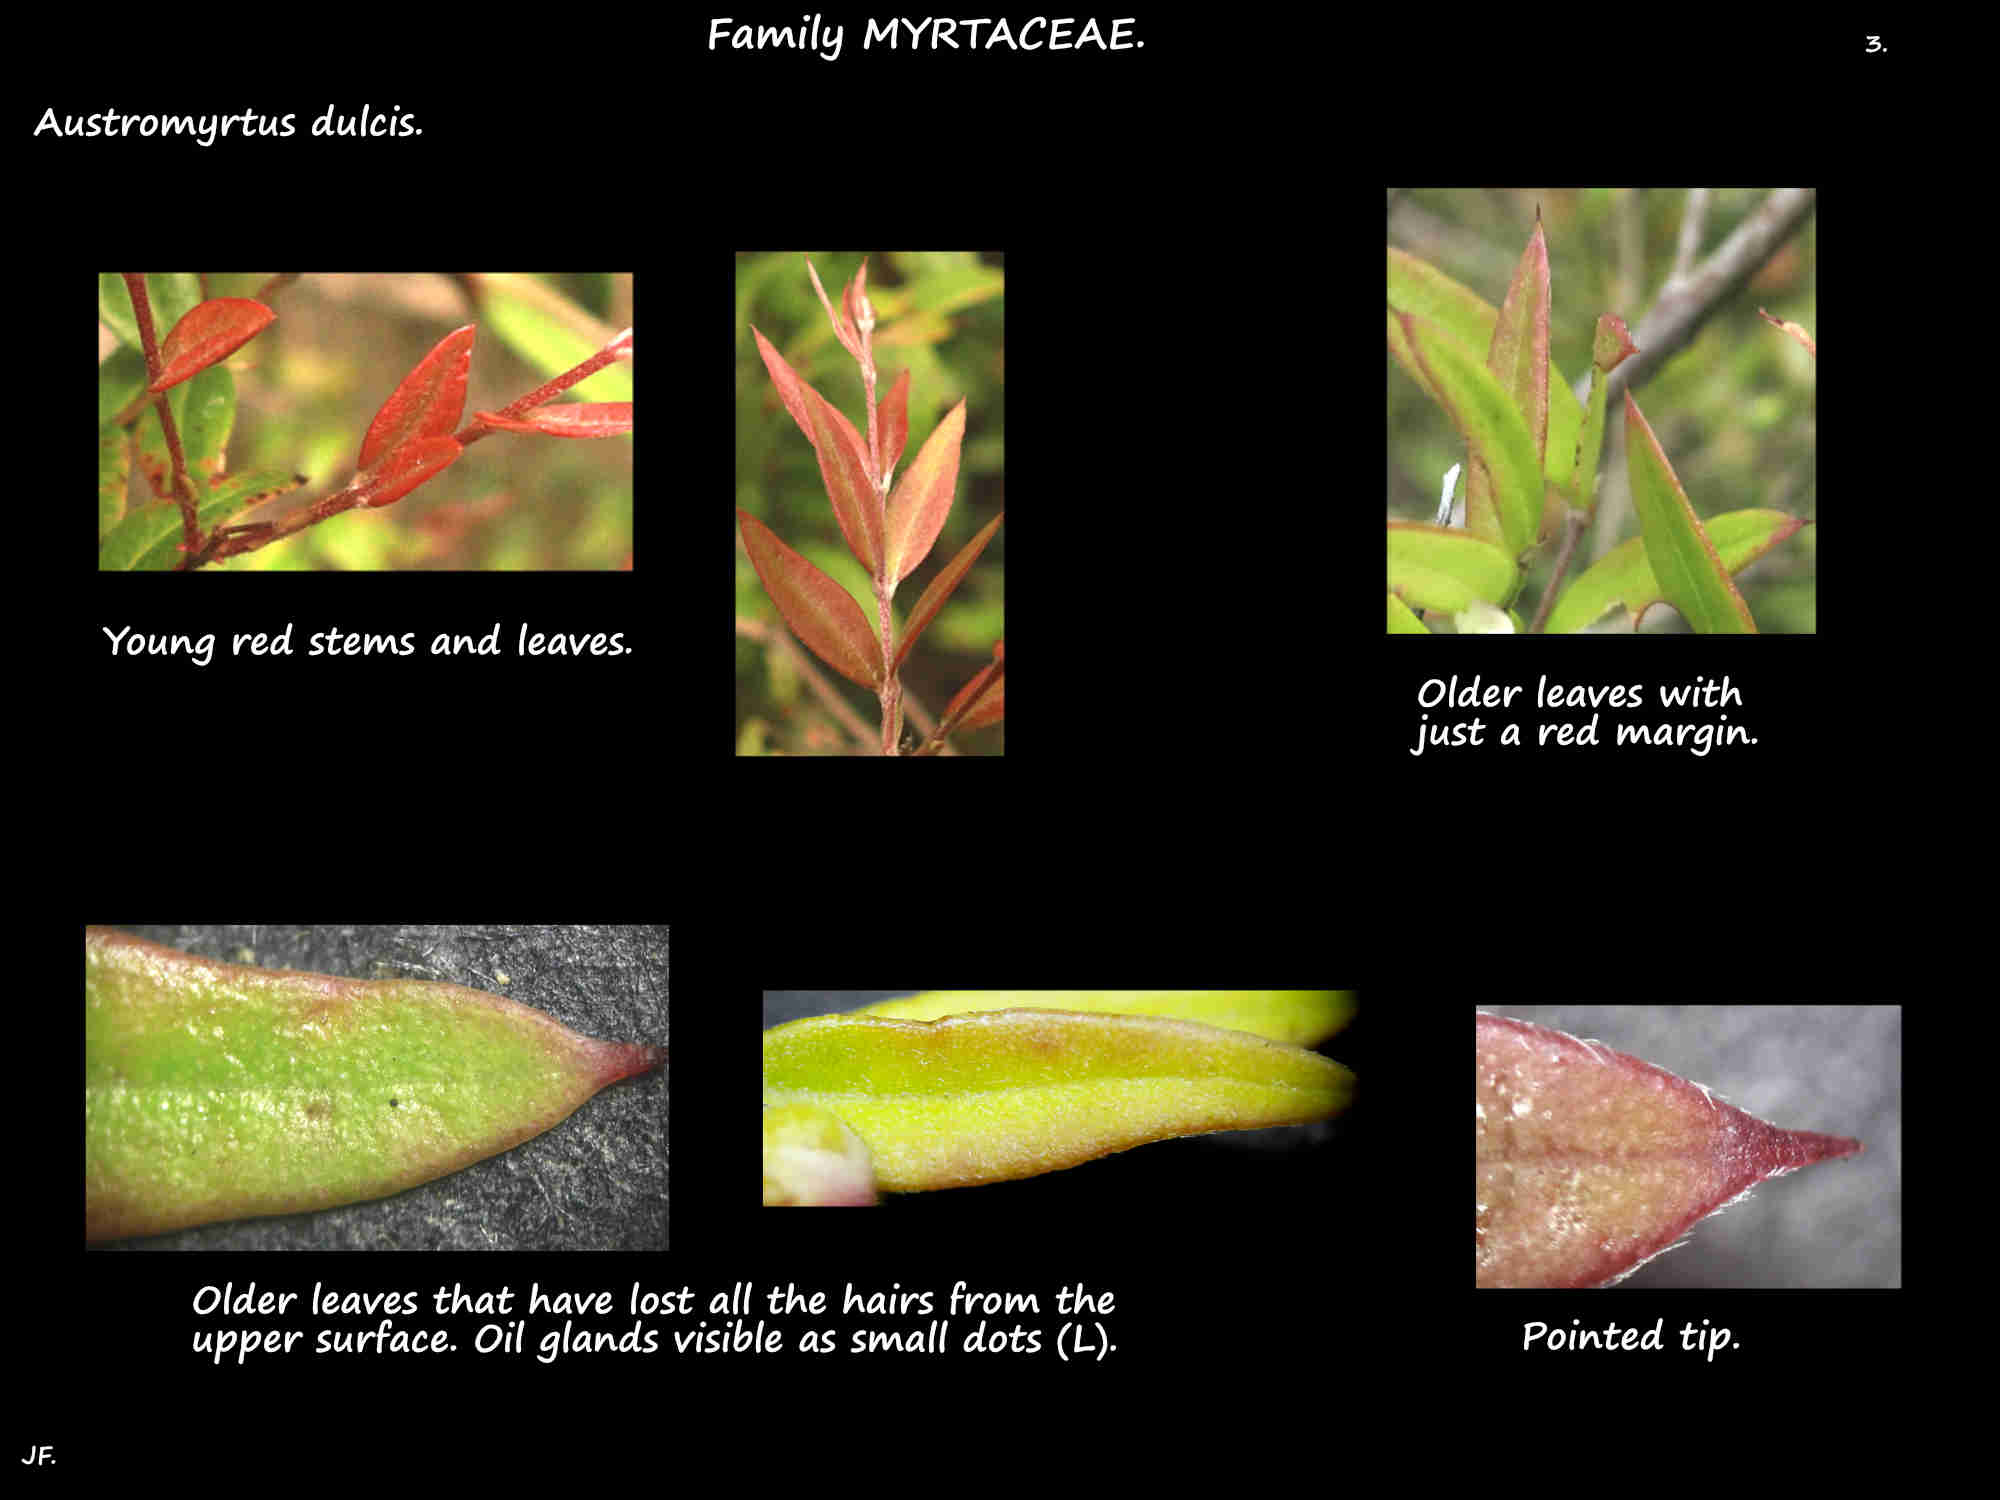 3 Red new growth of Austromyrtus dulcis